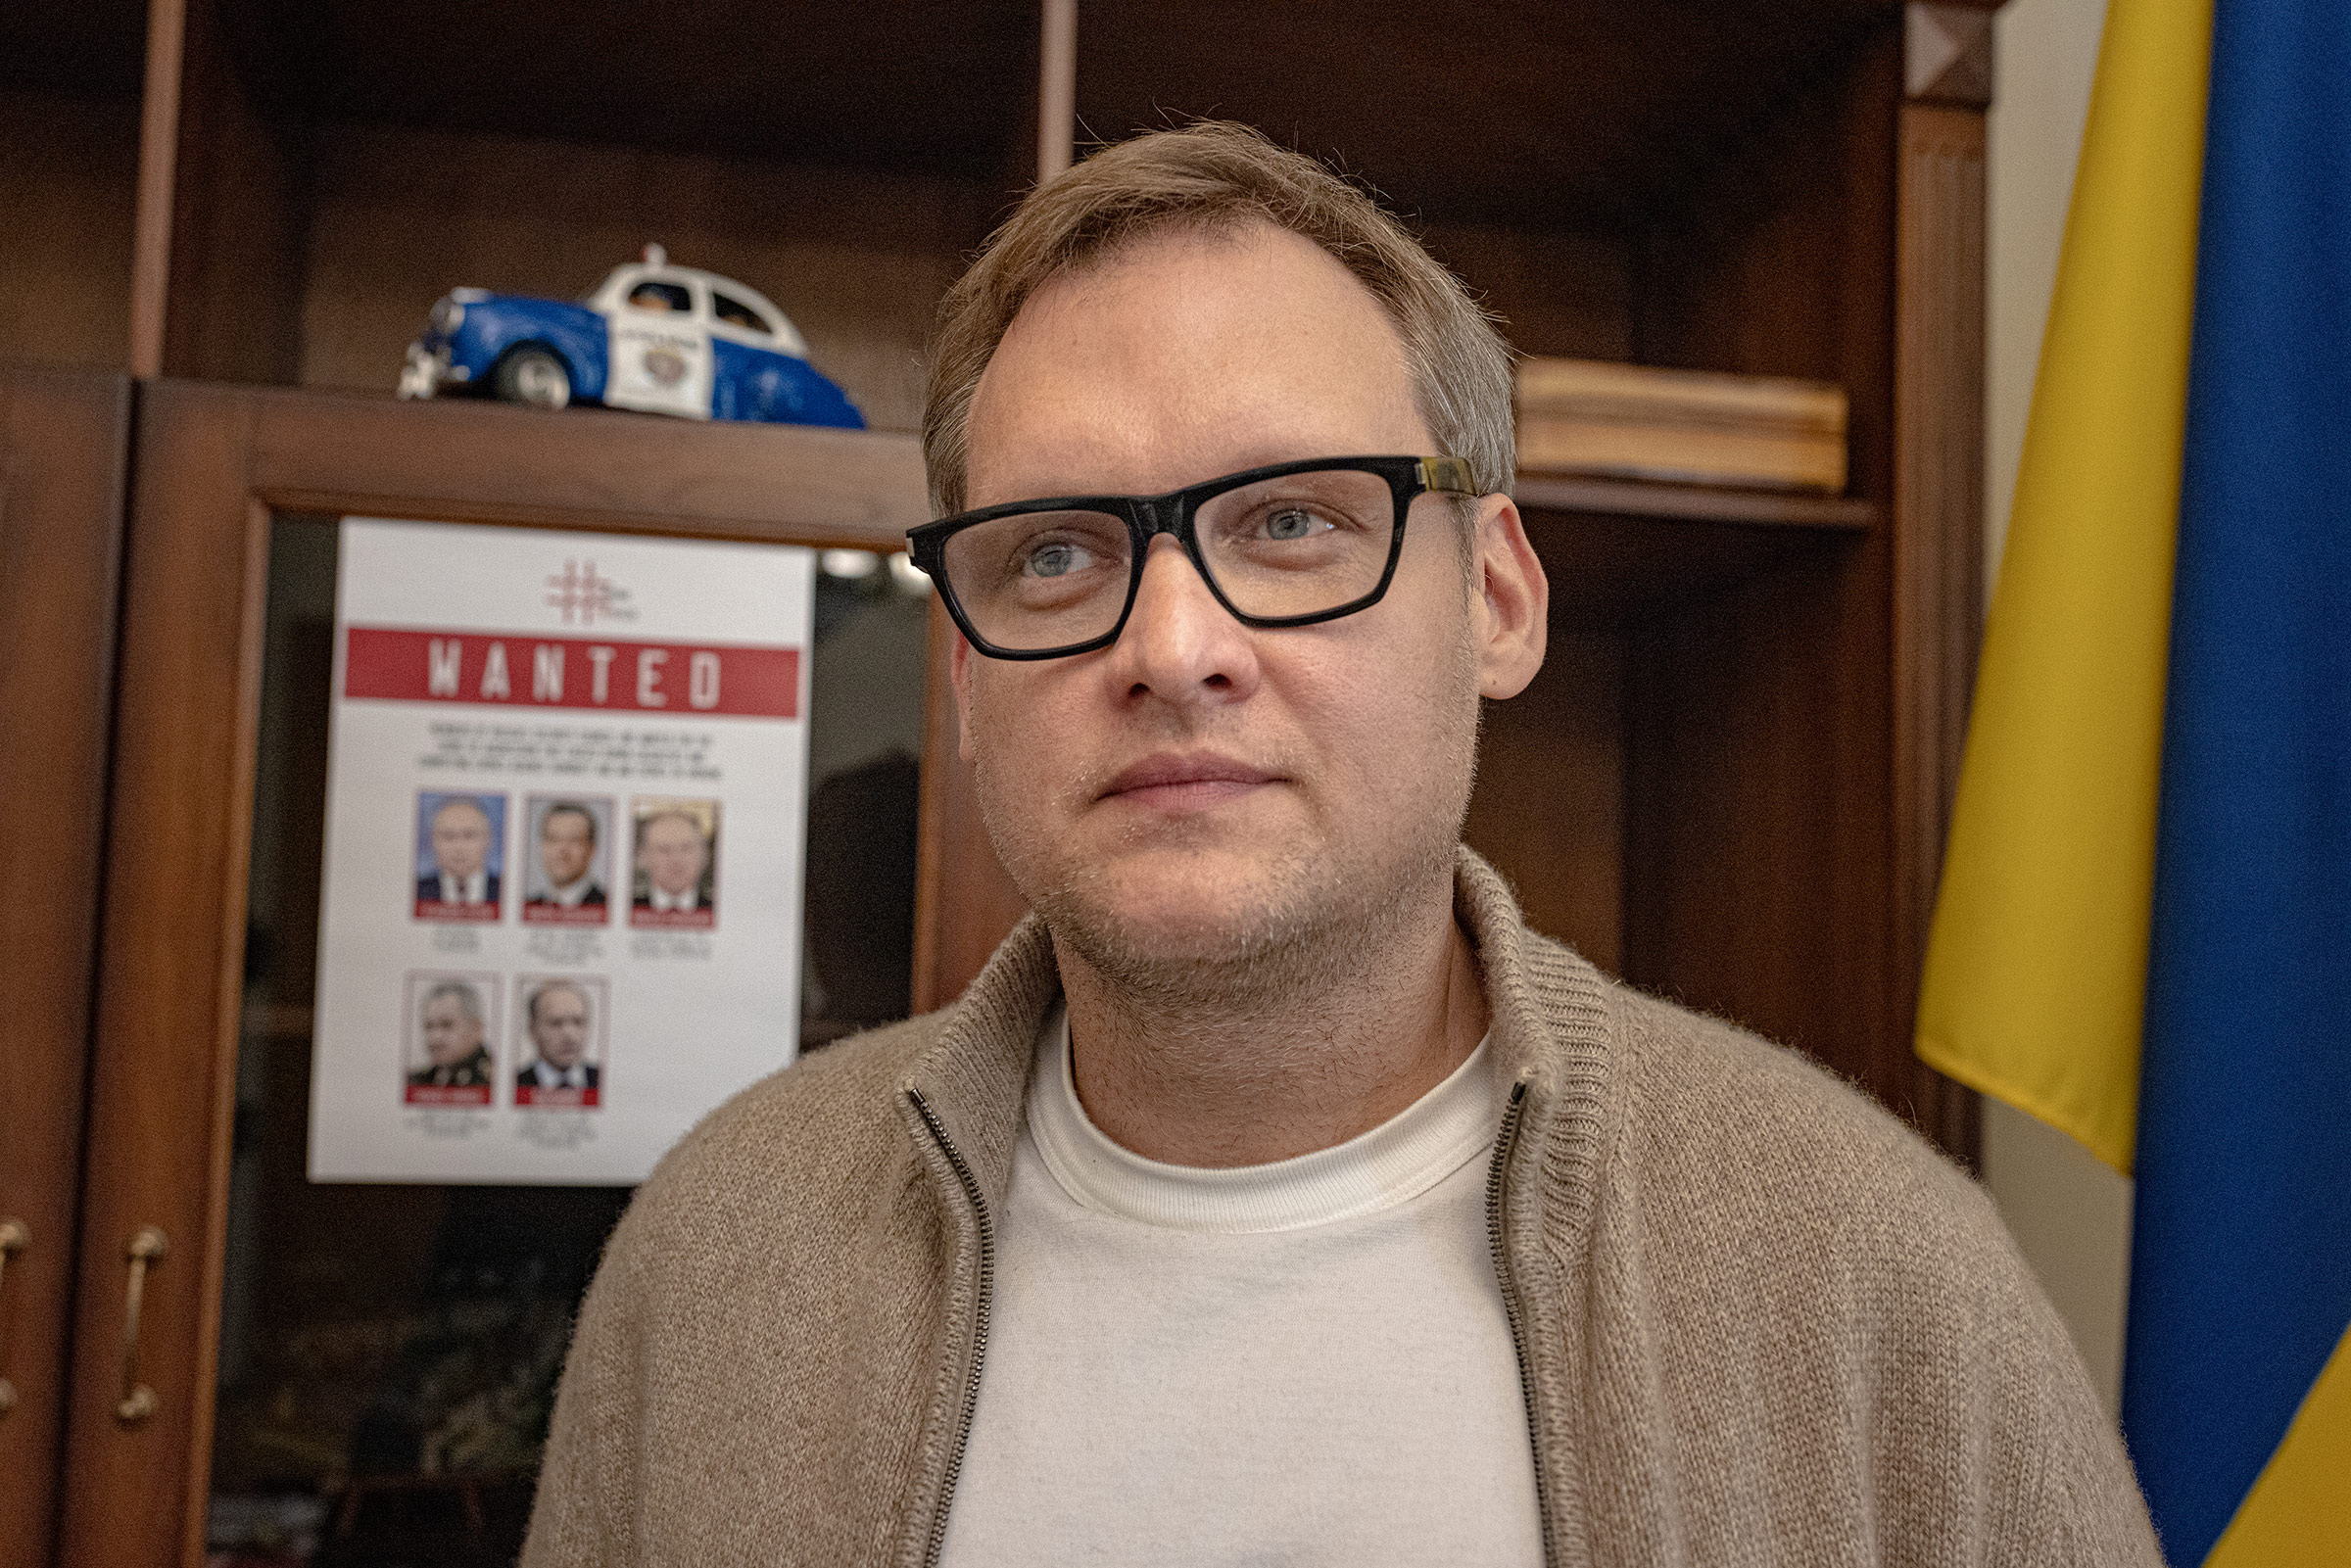 Smyrnov, aide to Zelensky, in his office in Kyiv. (Anton Skyba)